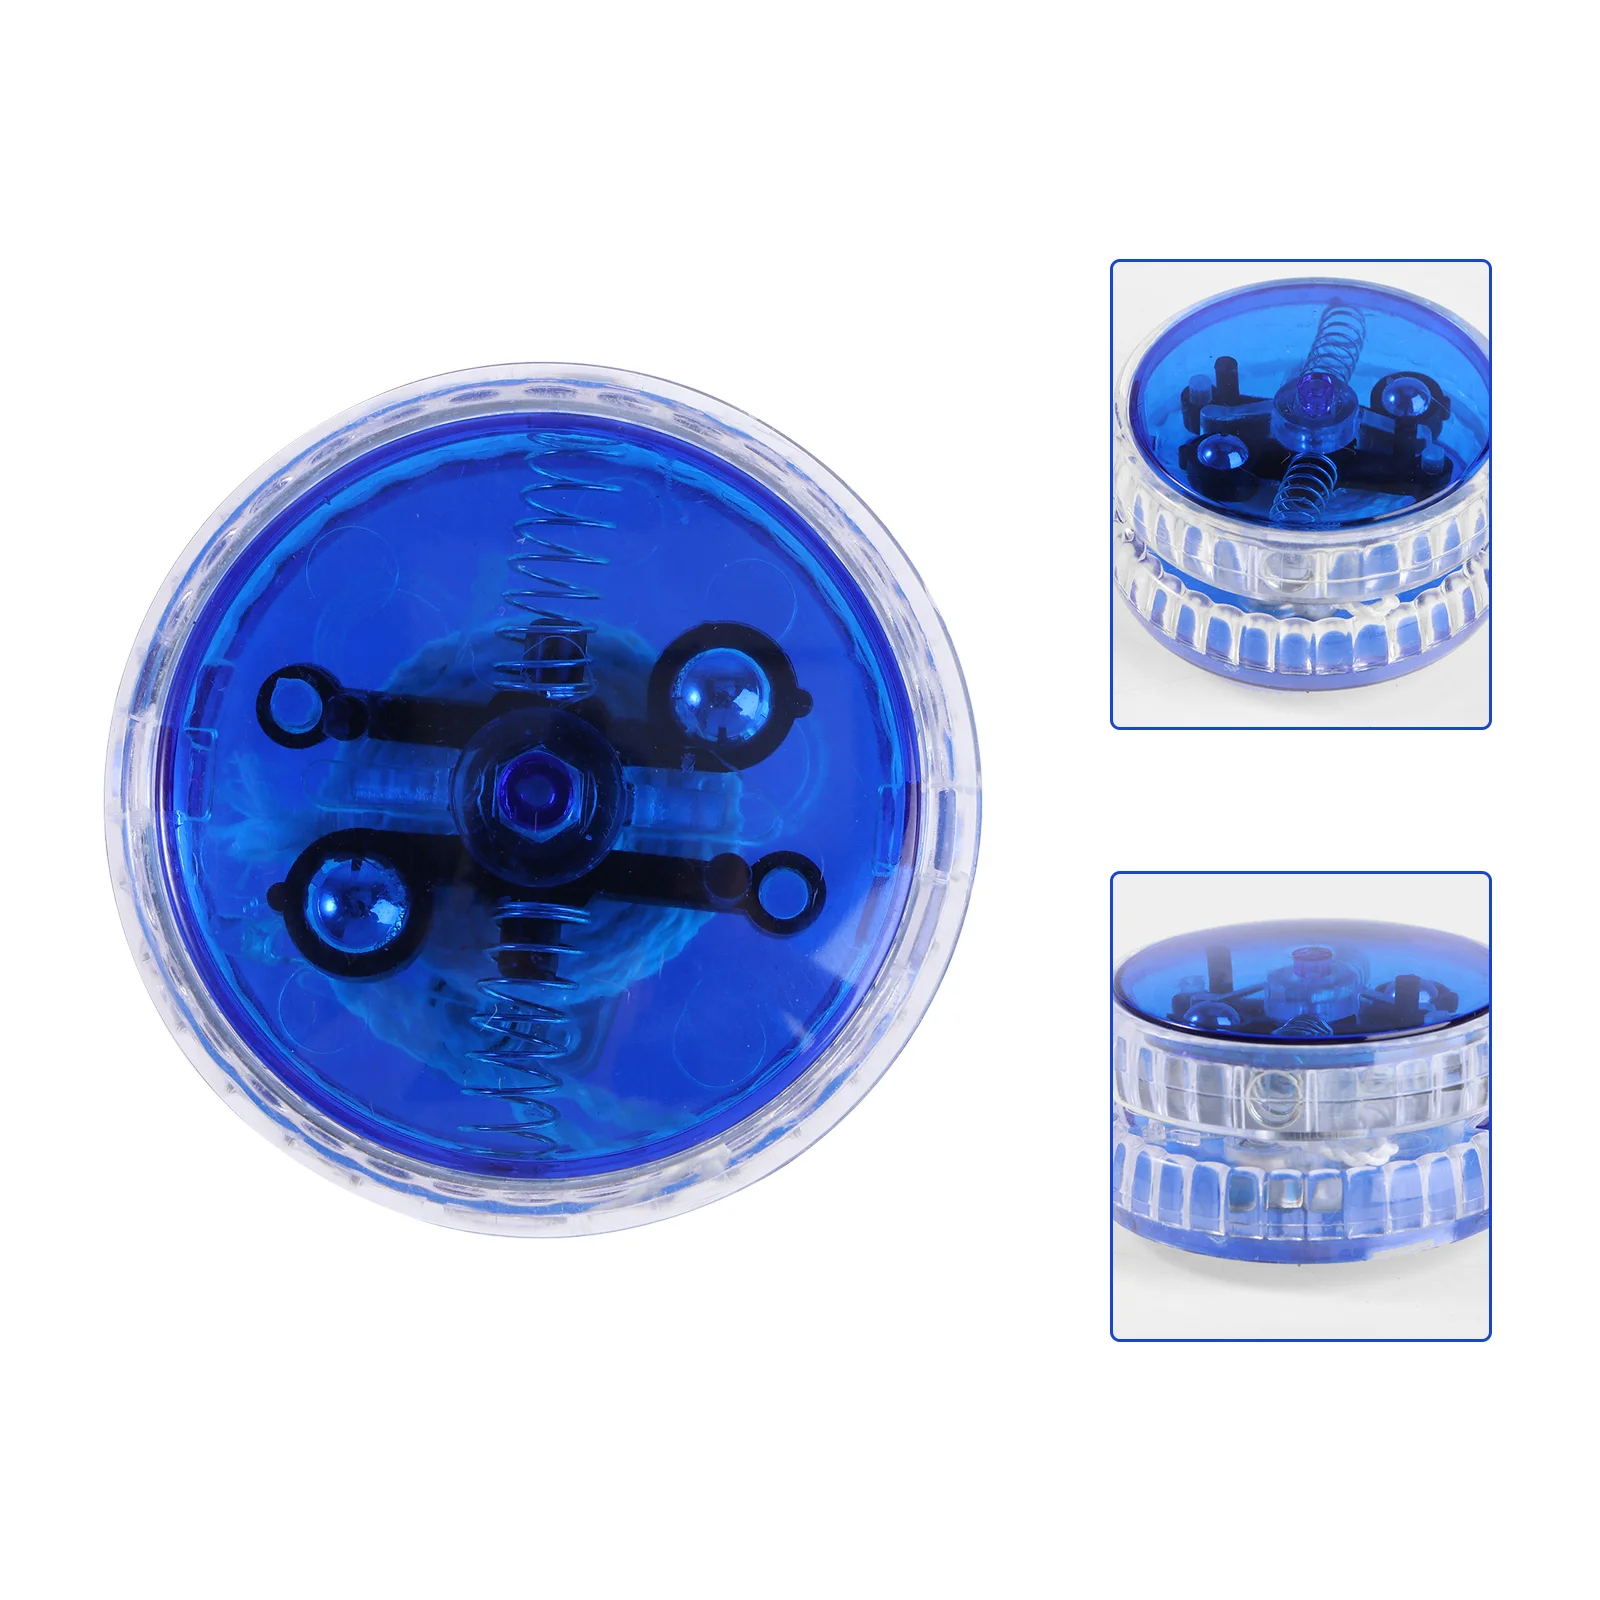 

NUOBESTY LED Luminous Yoyo with String Yo-Yo Ball Birthday Party Favors Prizes (Blue)